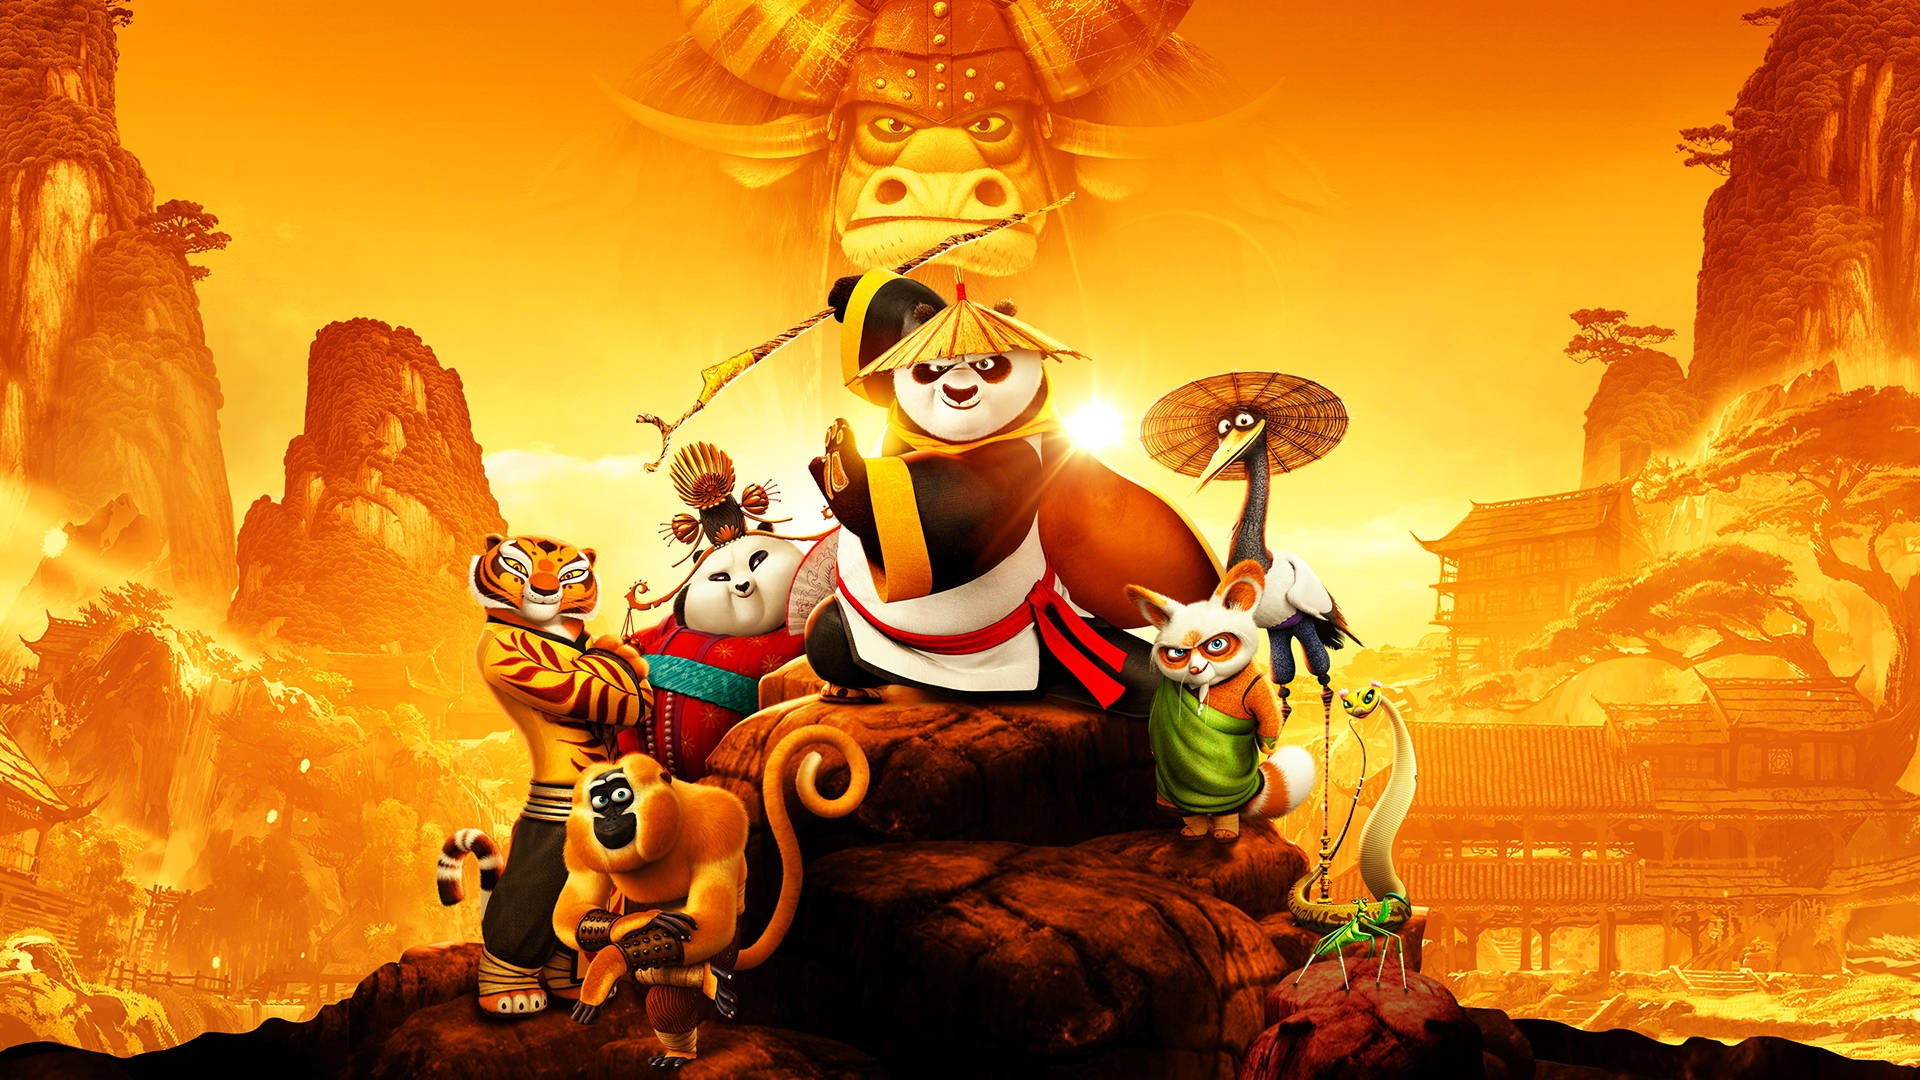 Top 999+ Kung Fu Panda Wallpapers Full HD, 4K✅Free to Use